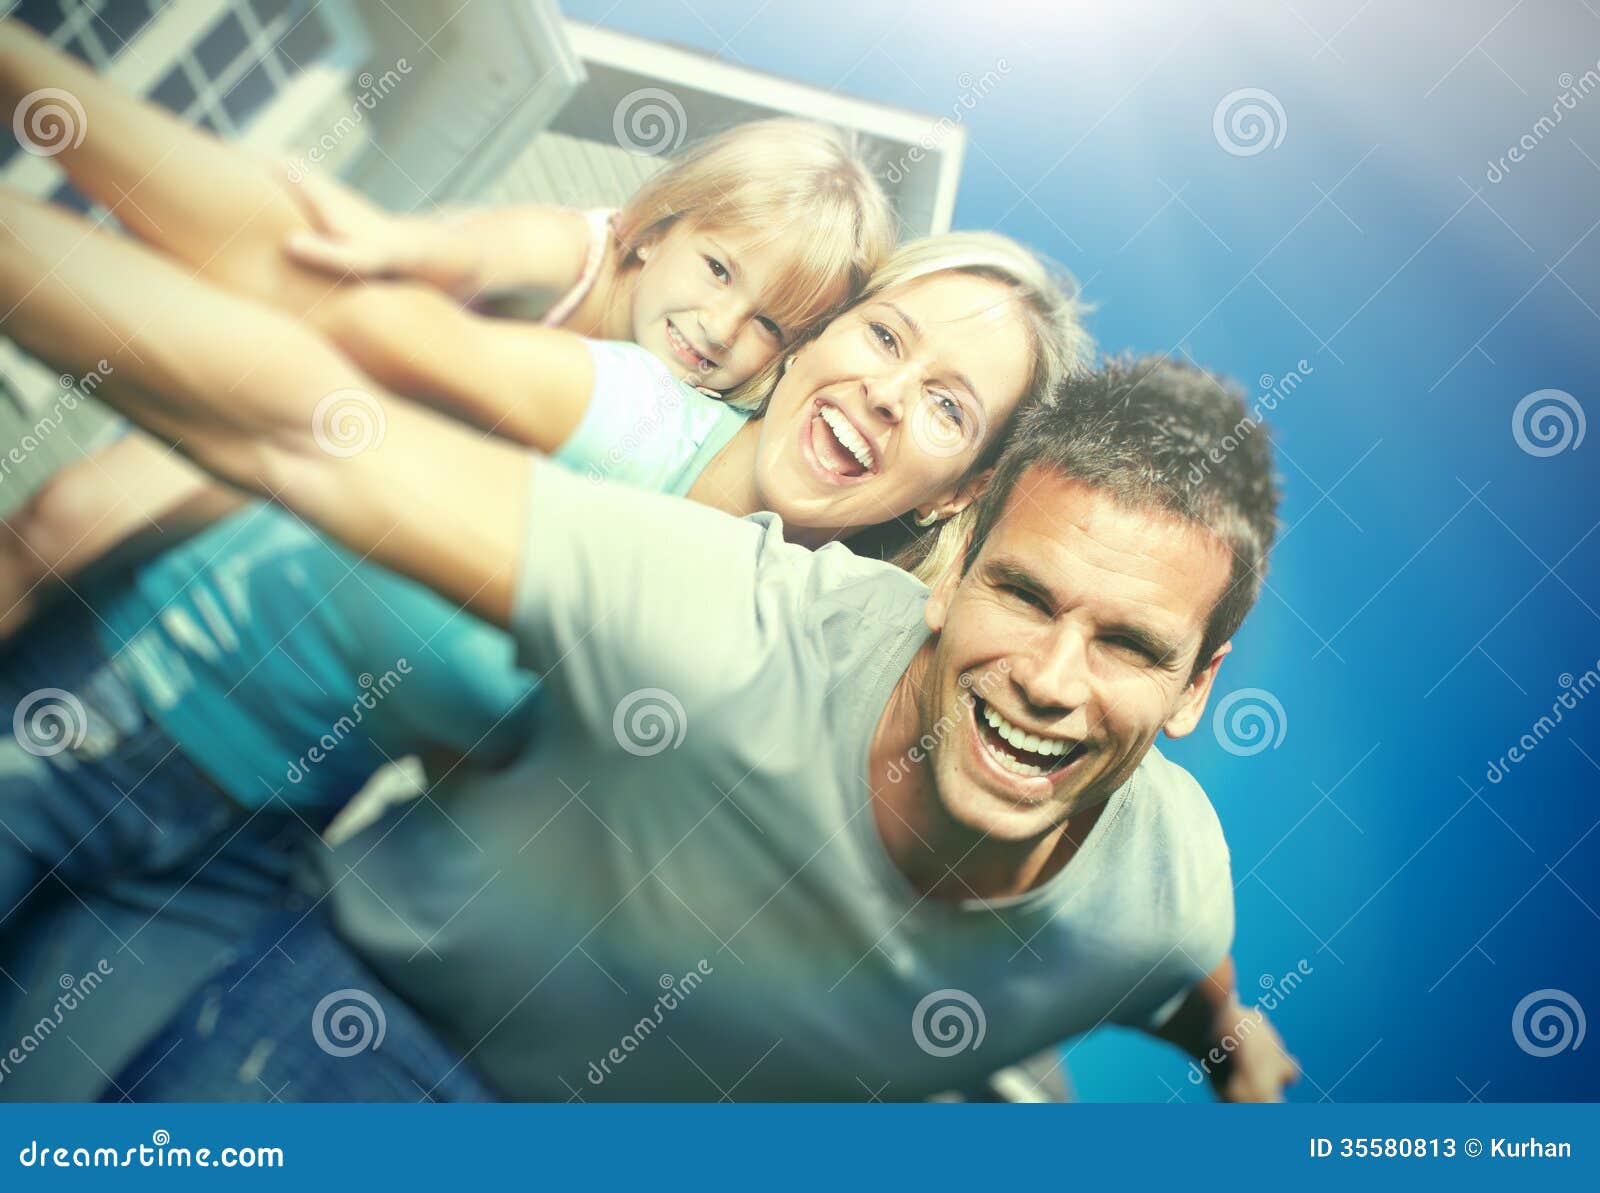 Happy Family Near the House Stock Image - Image of horizontal, home